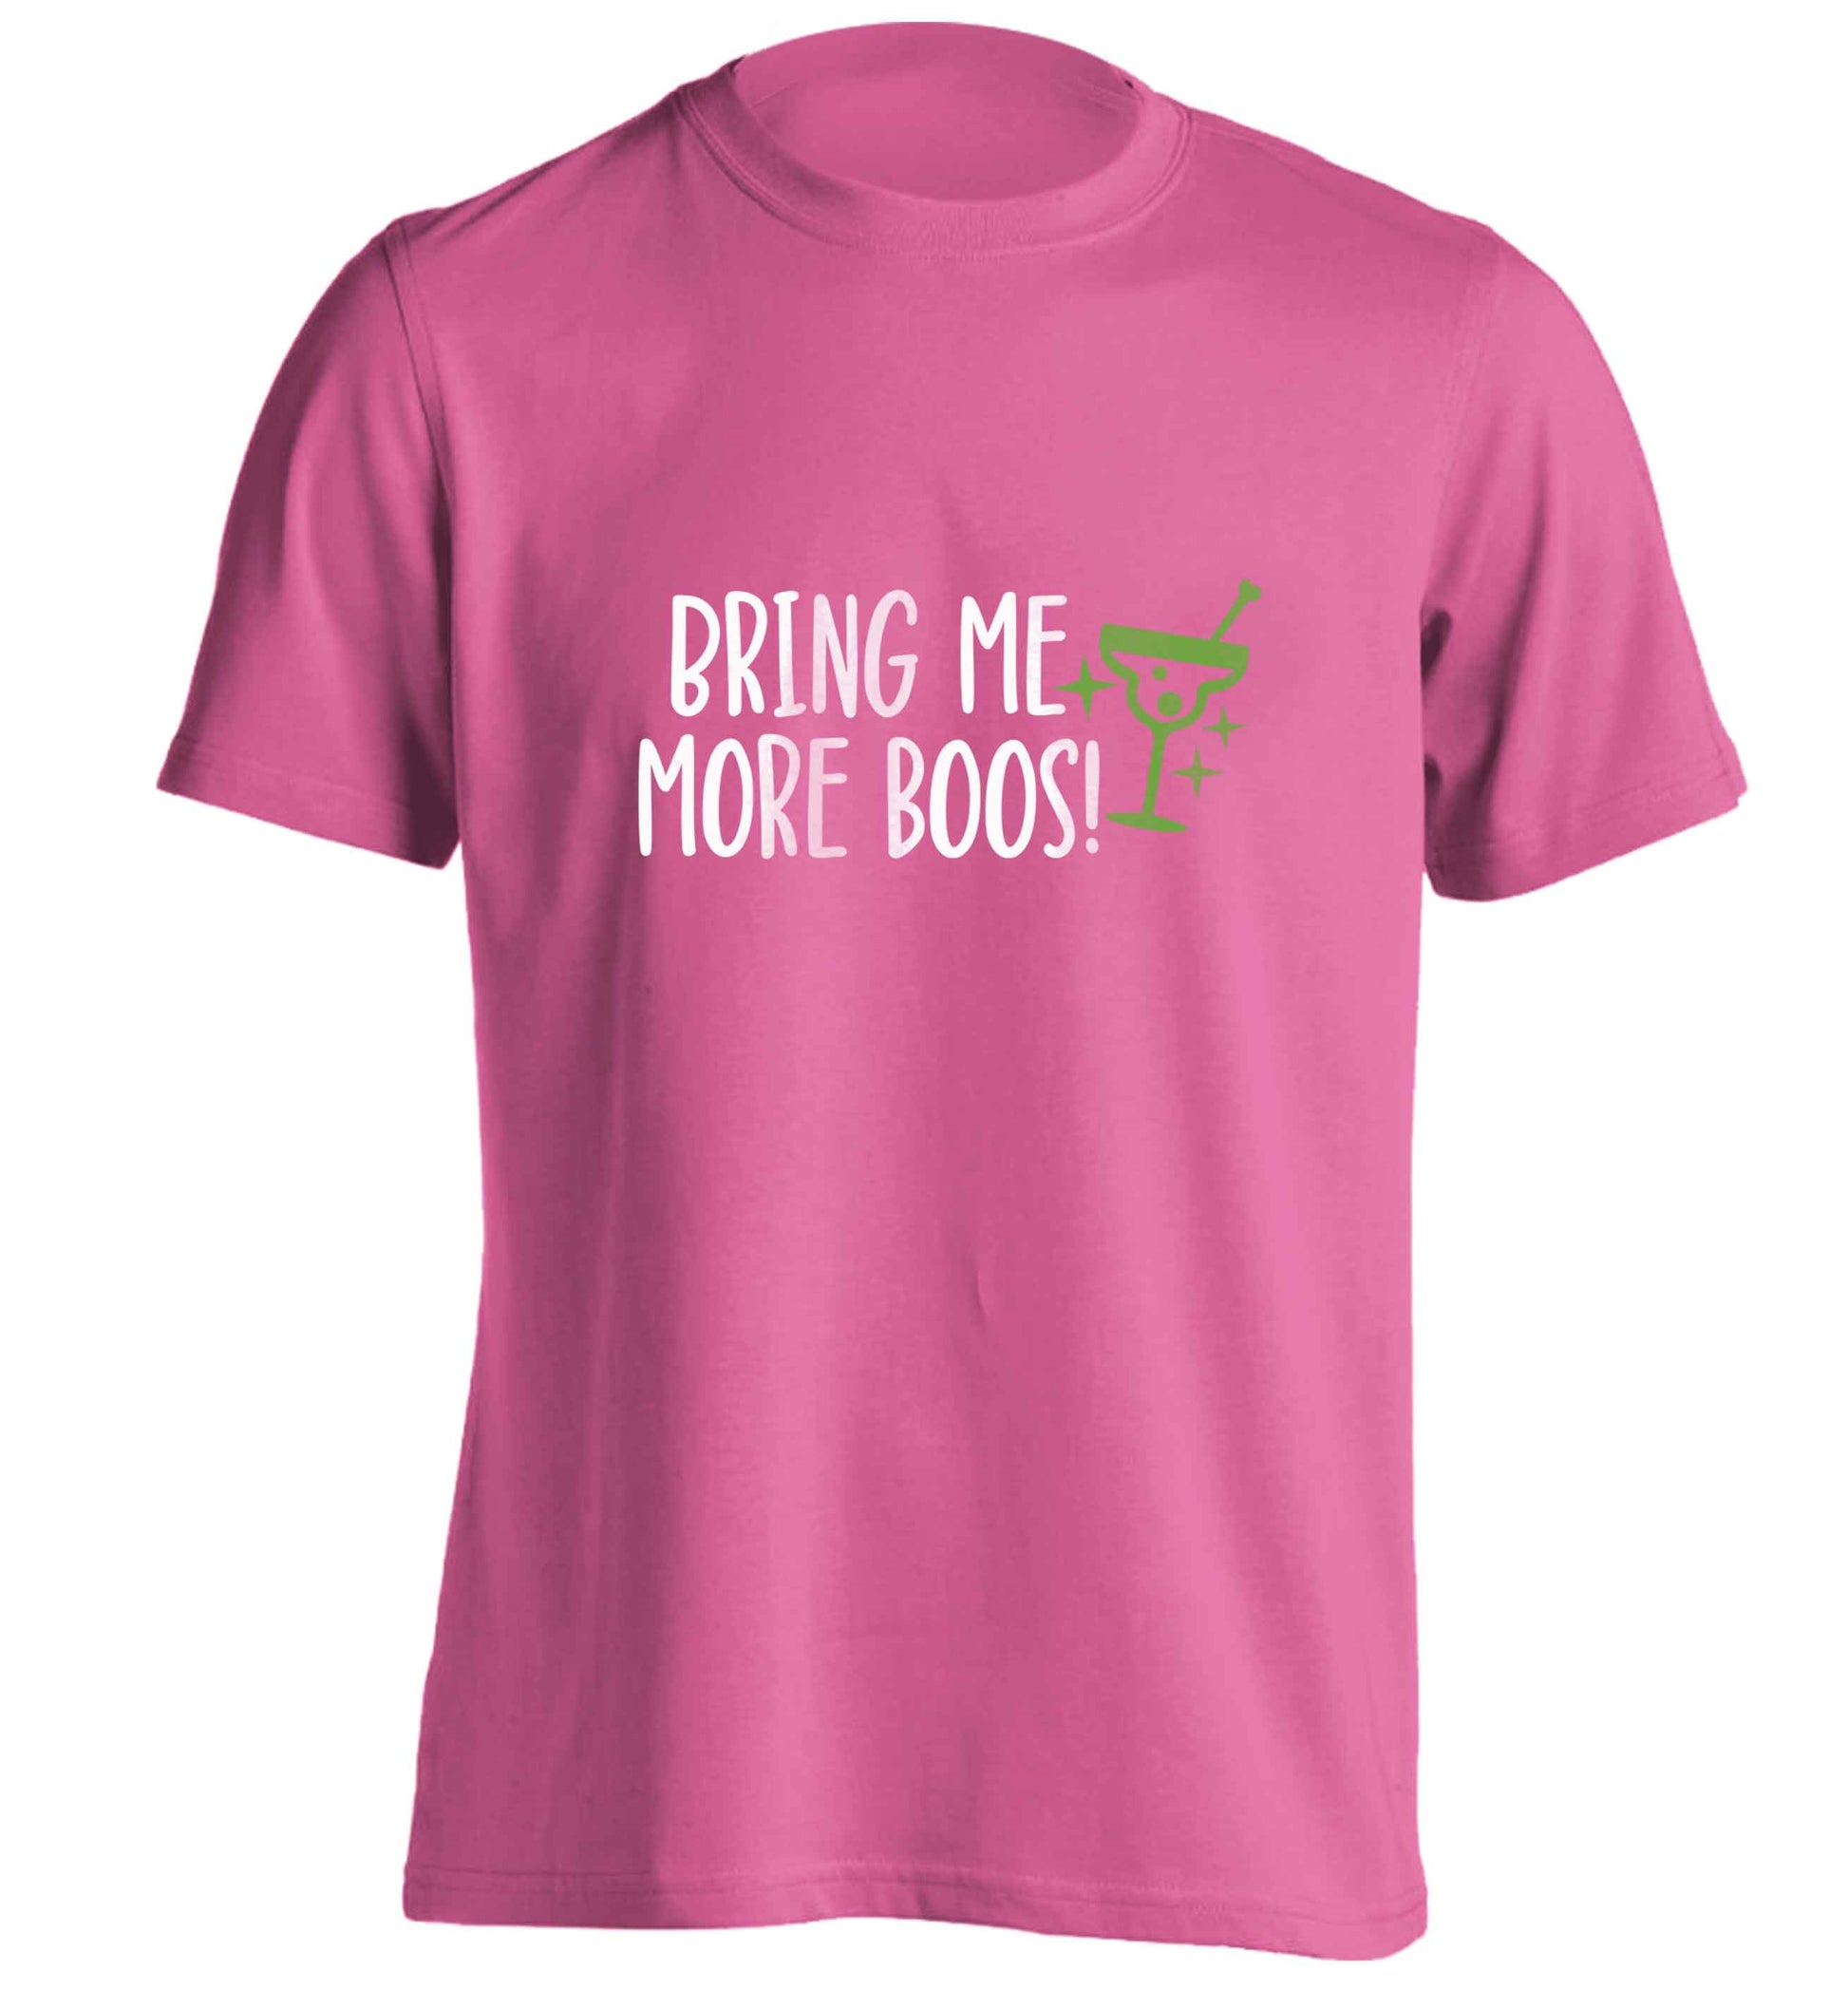 Bring me more boos adults unisex pink Tshirt 2XL